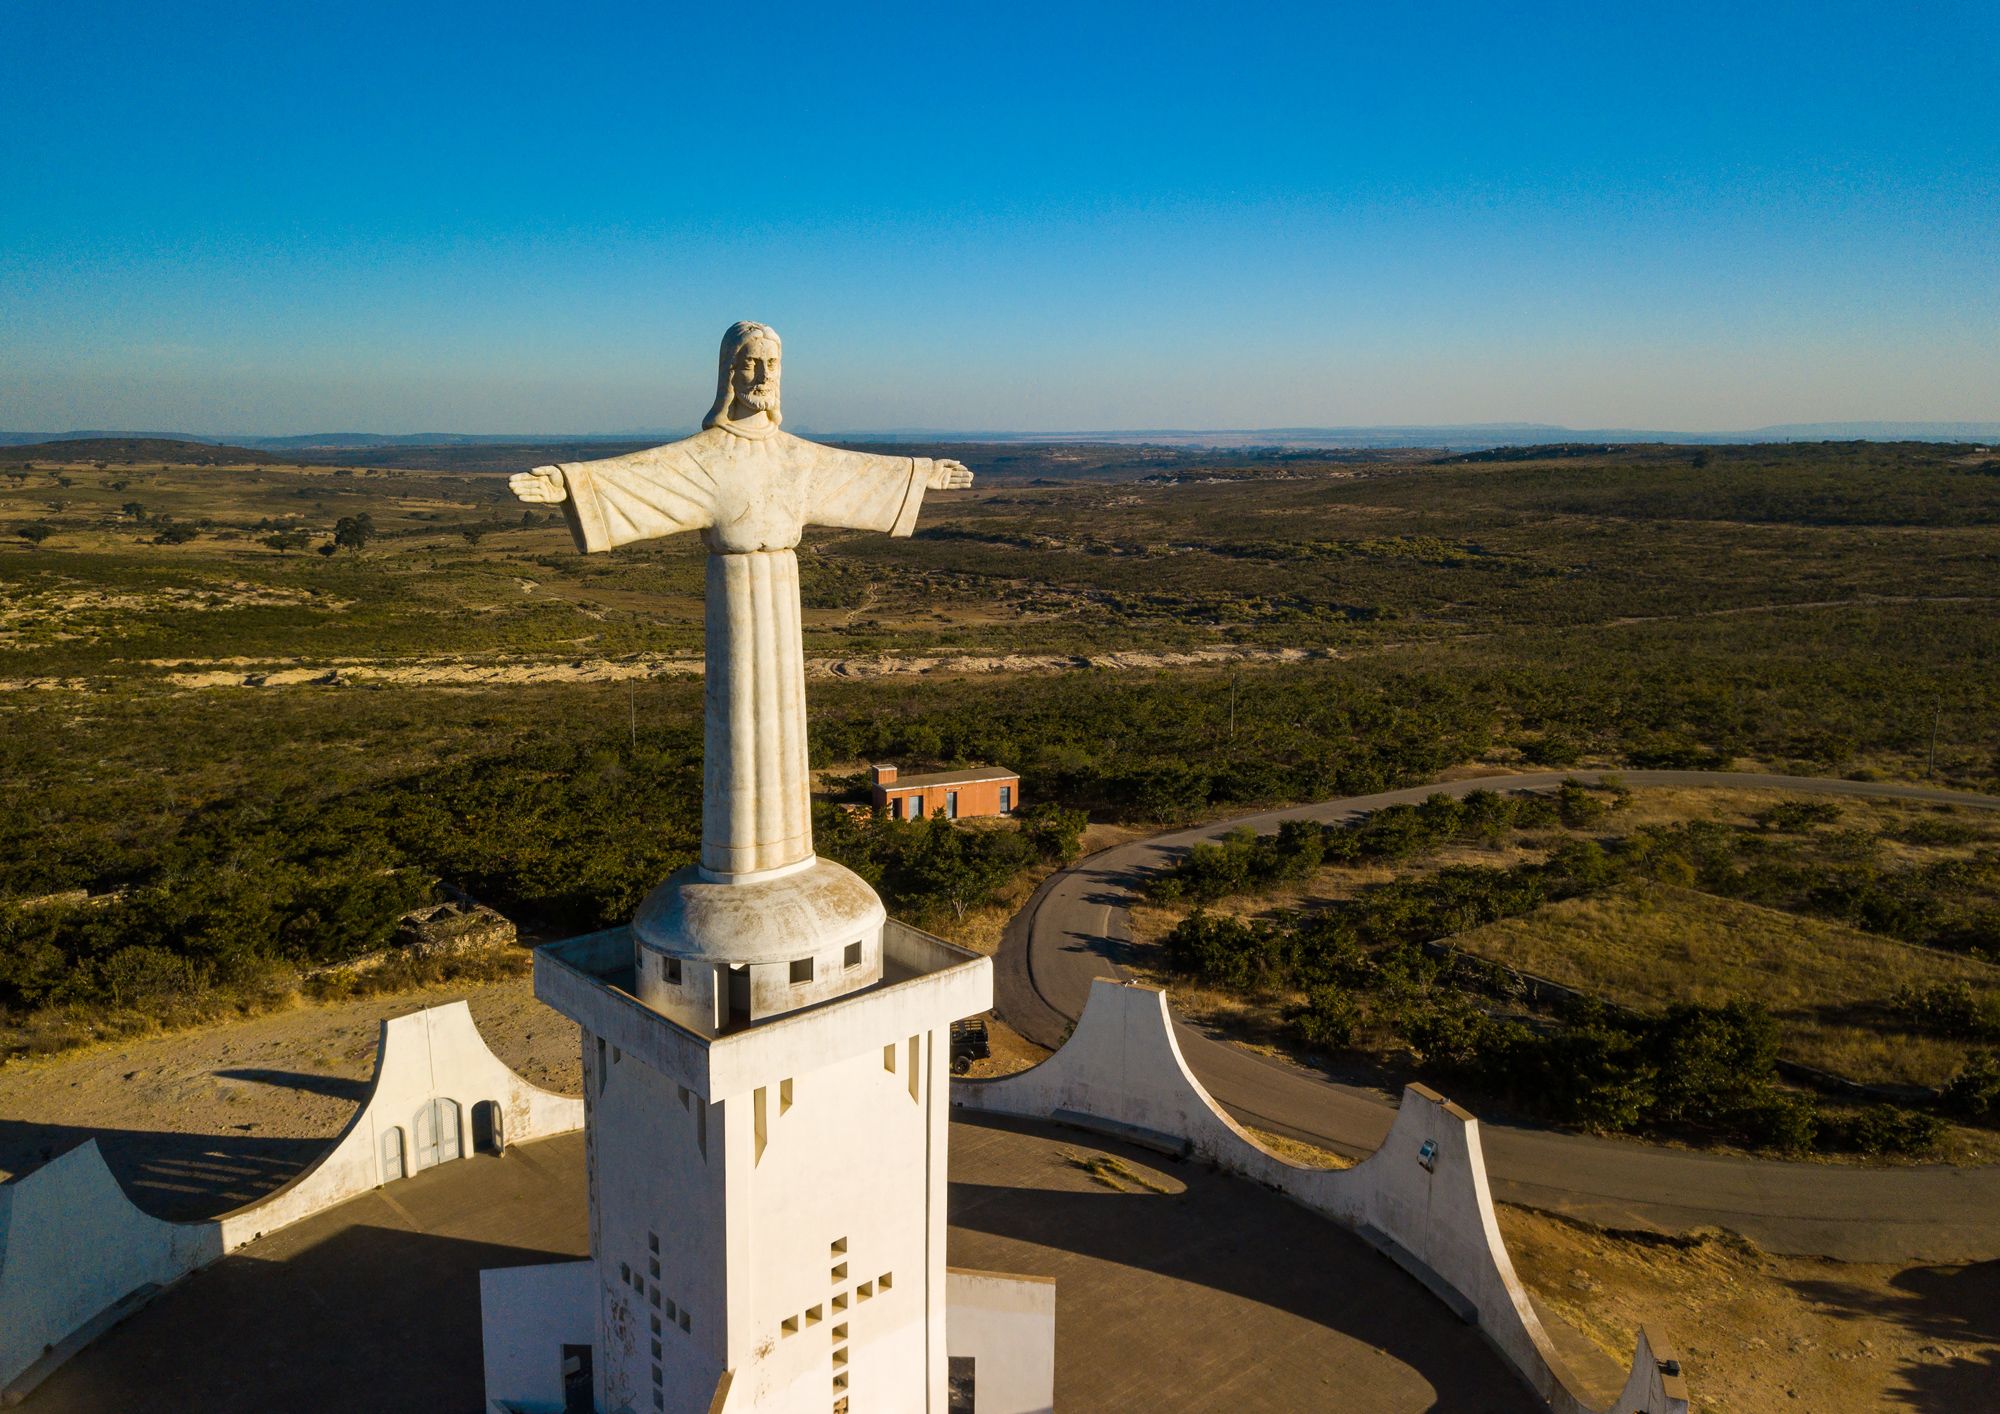 LUBANGO, ANGOLA - JULY 20: Aerial view of the Cristo Rei, Huila Province, Lubango, Angola on July 20, 2018 in Lubango, Angola. (Photo by Eric Lafforgue/Art In All Of Us/Corbis via Getty Images)